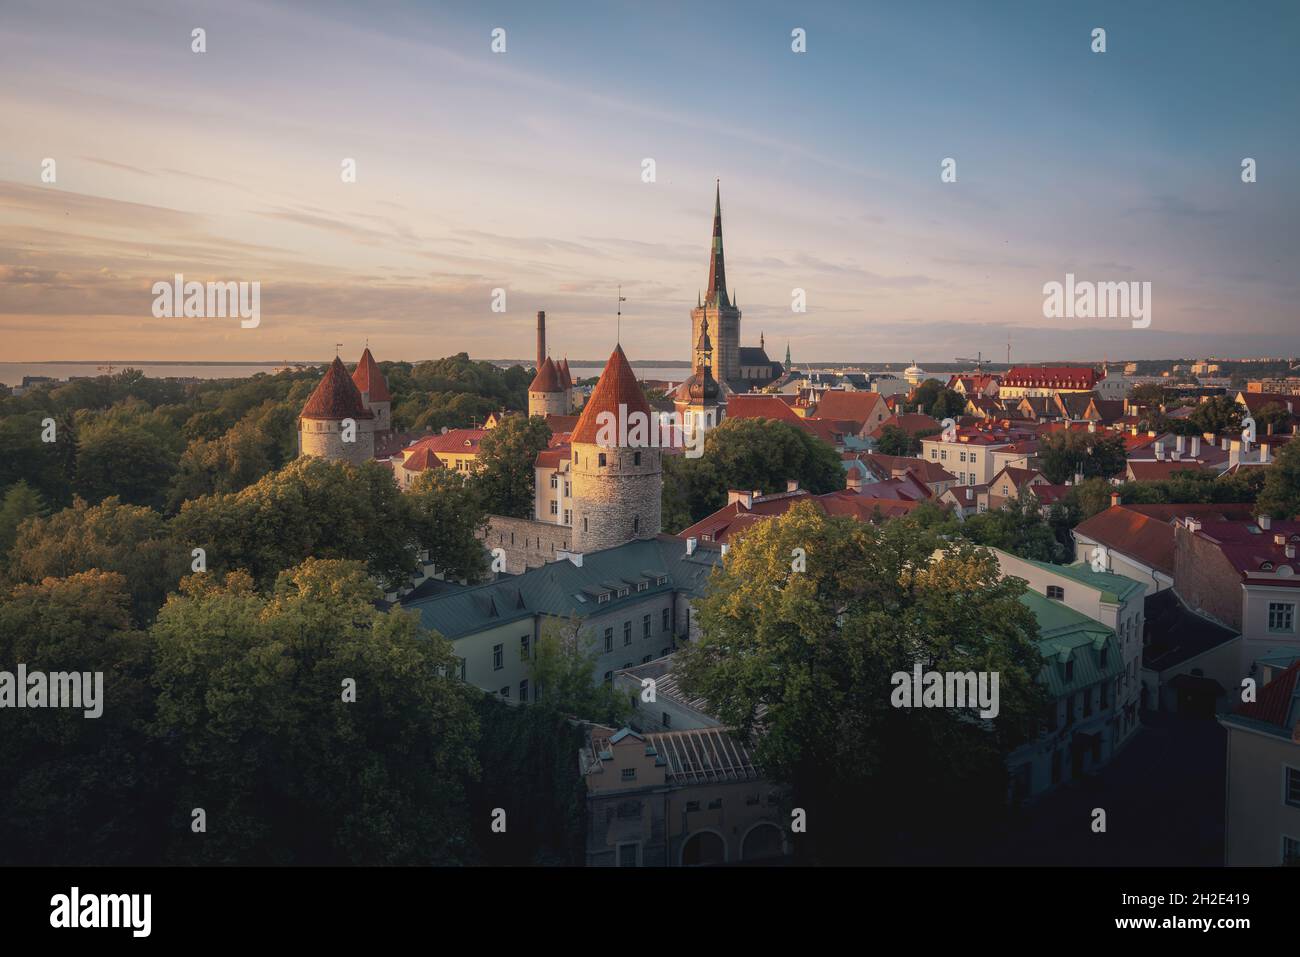 Vista aérea de Tallinn al atardecer con muchas torres de la muralla de la ciudad de Tallinn y la torre de la iglesia de St Olaf - Tallinn, Estonia Foto de stock